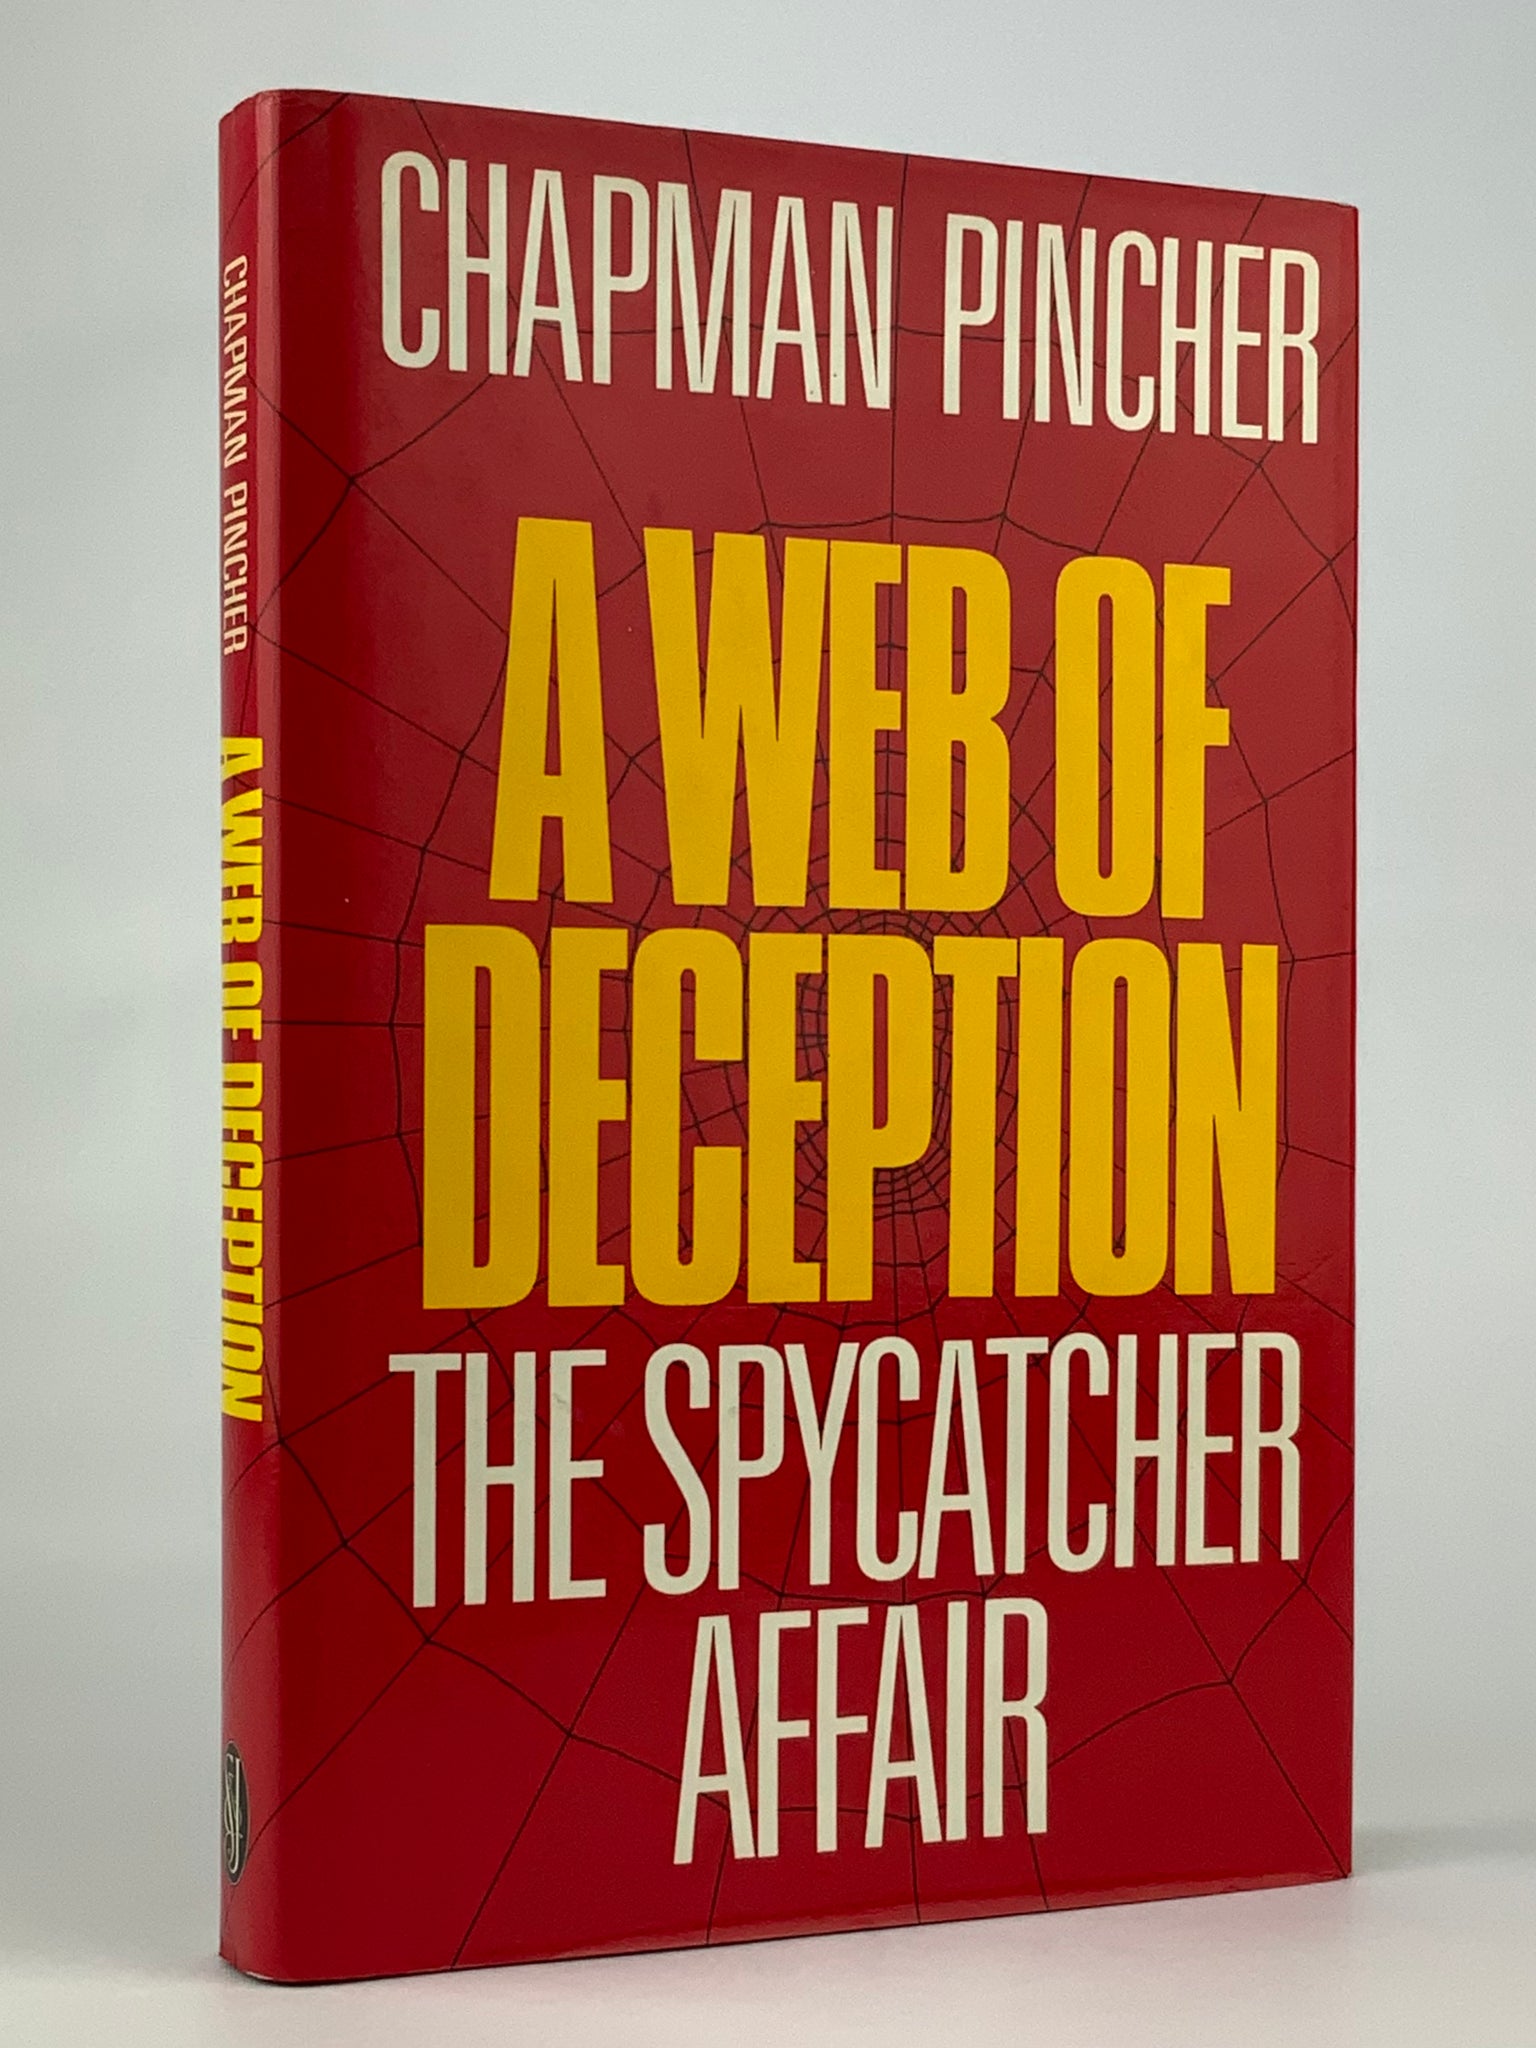 A Web of Deception